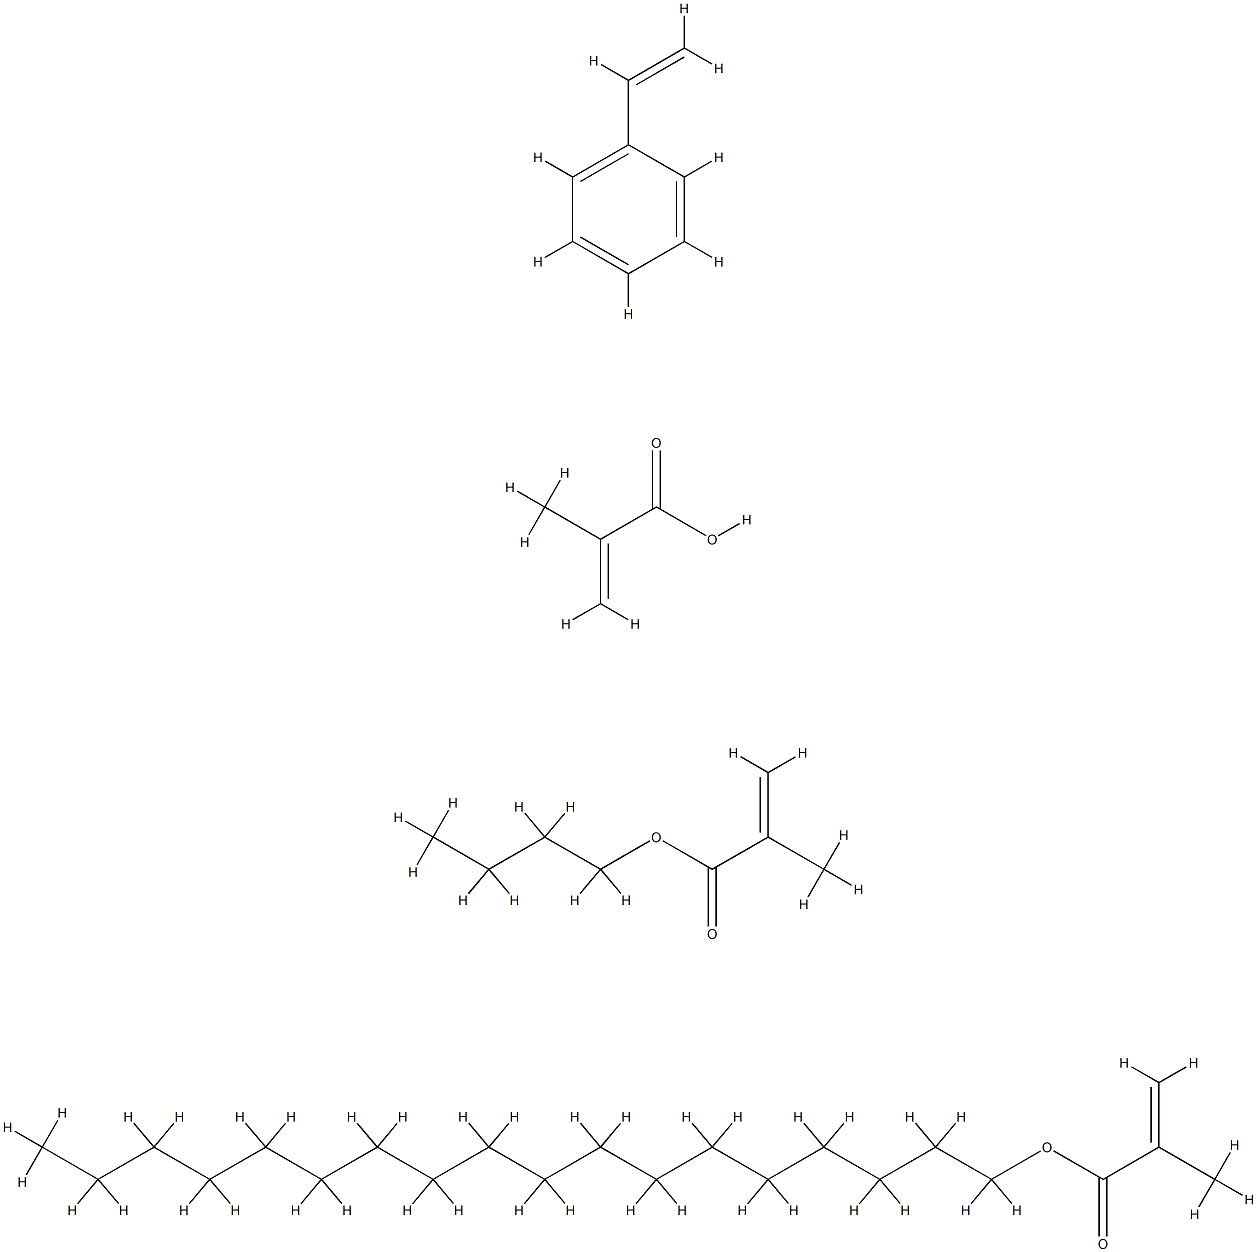 2-Propenoic acid, 2-methyl-, polymer with butyl 2-methyl-2-propenoate, ethenylbenzene and octadecyl 2-methyl-2-propenoate